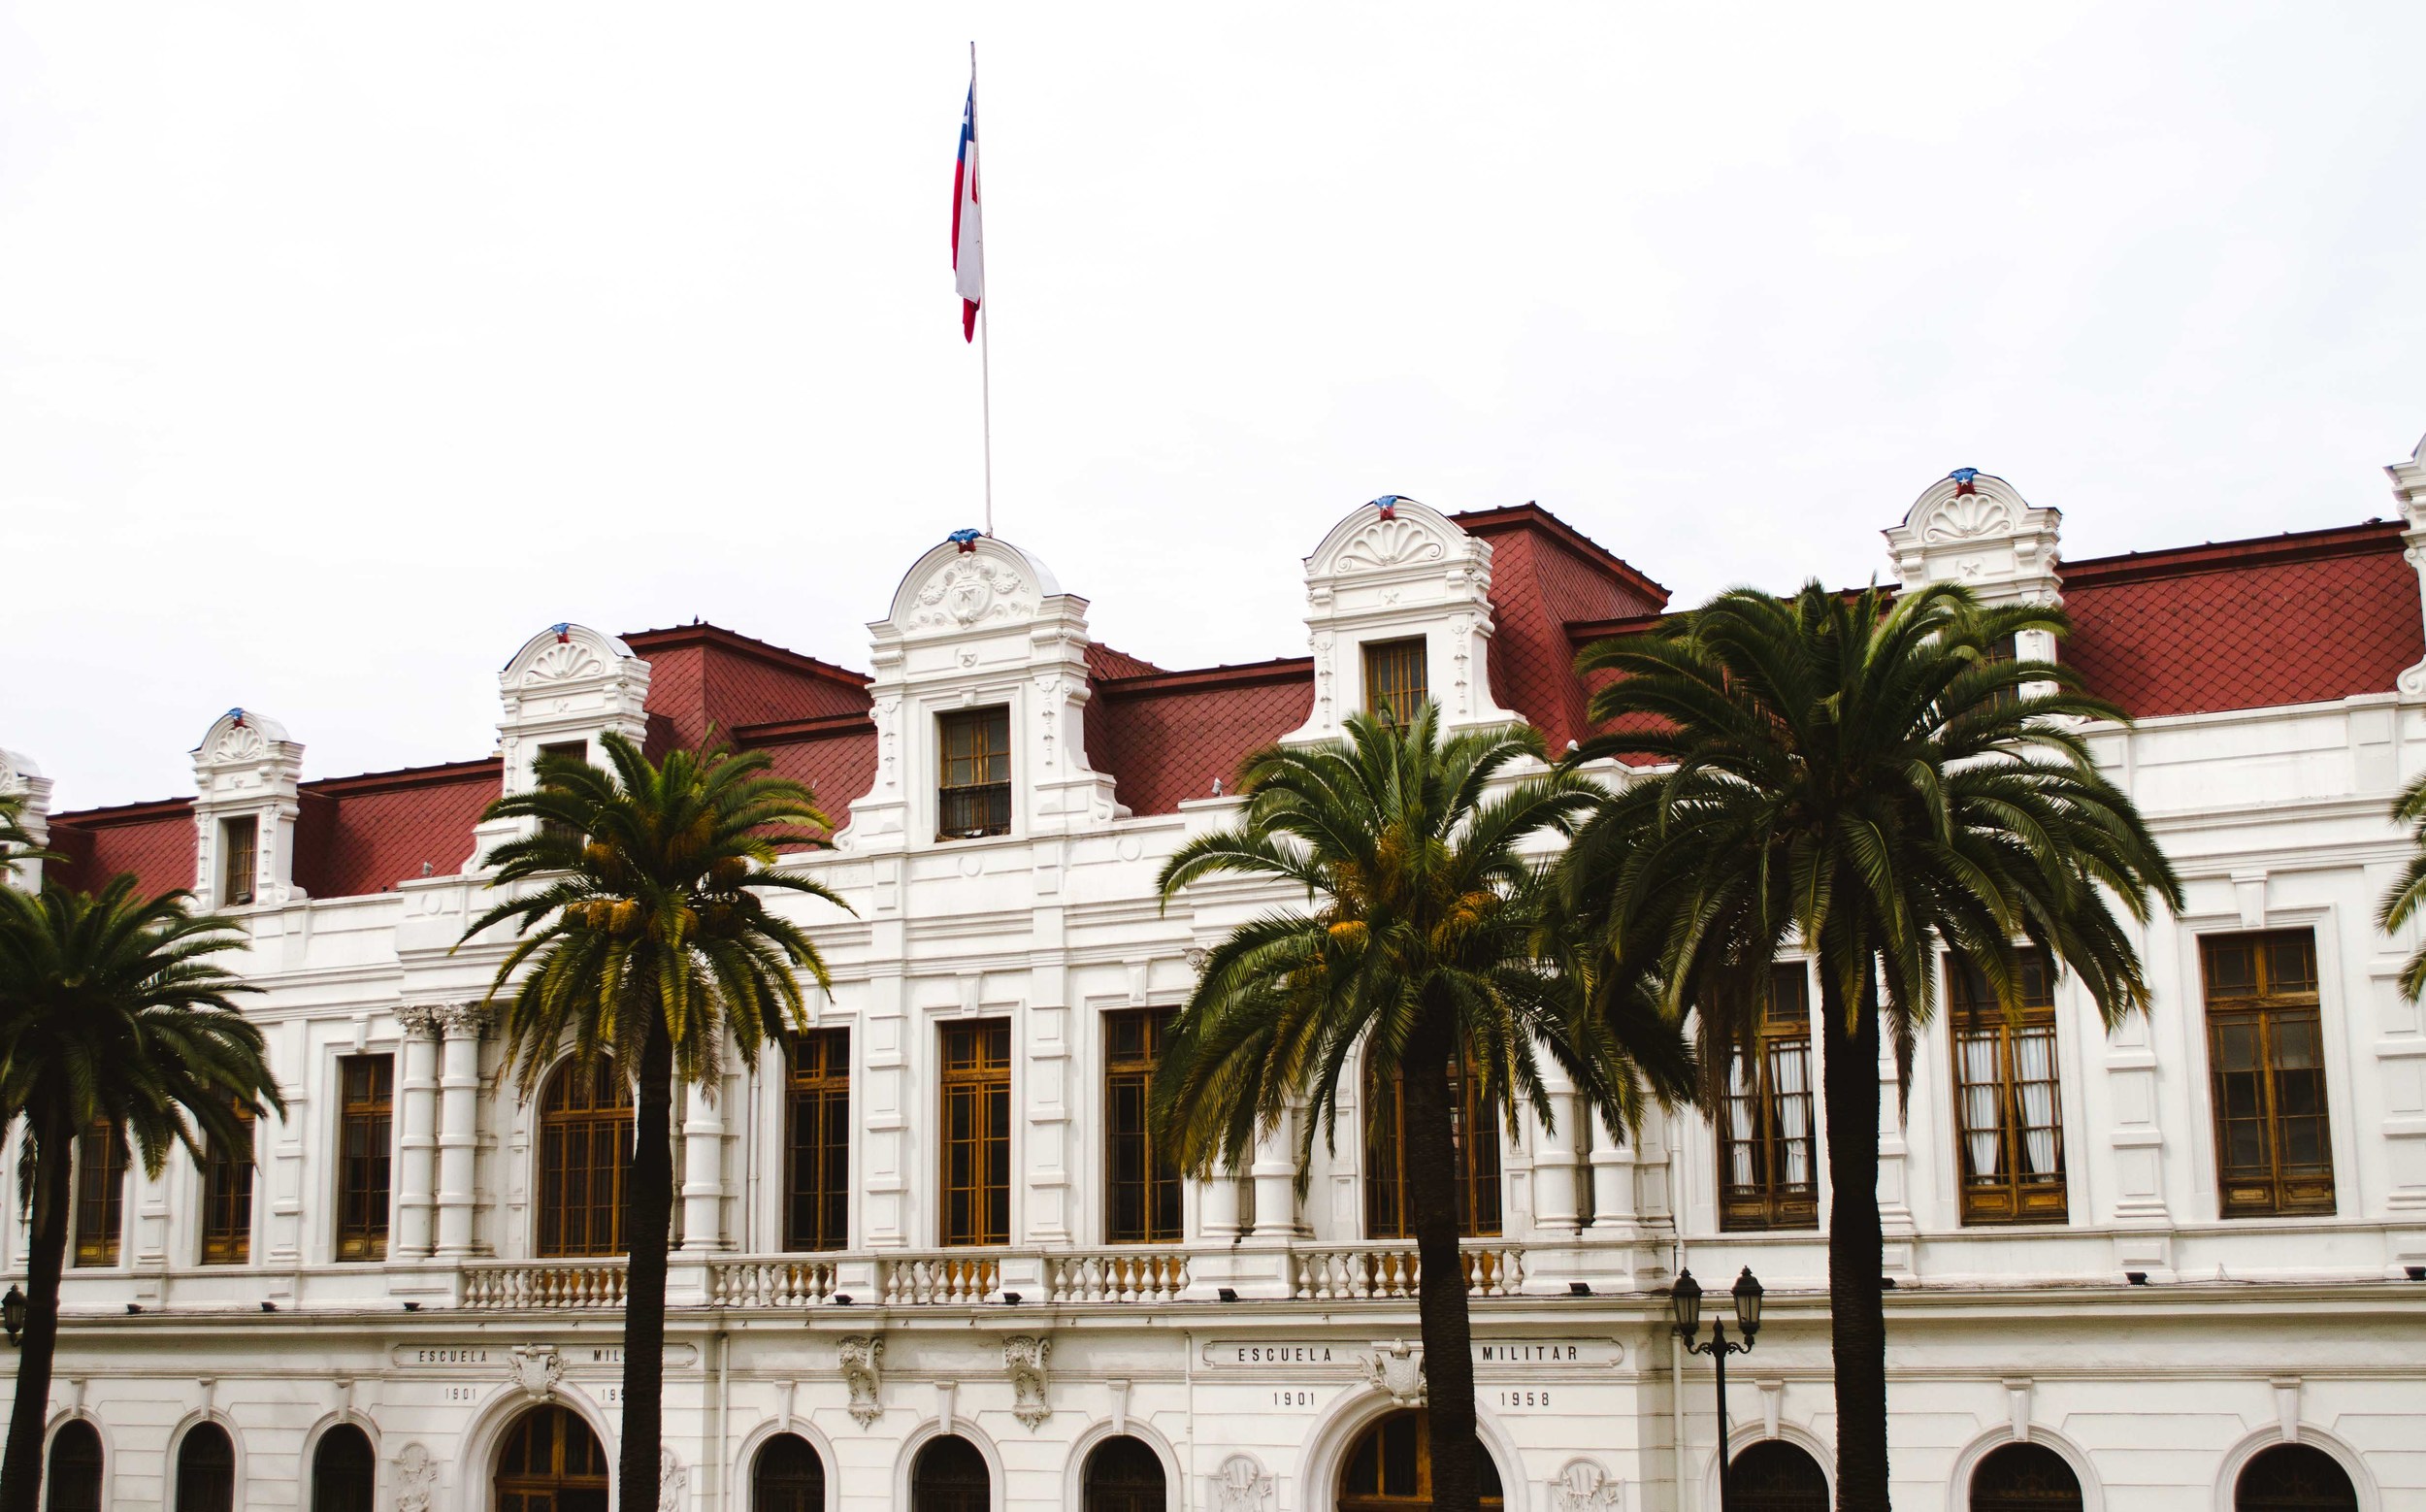  School and military museum in Santiago 